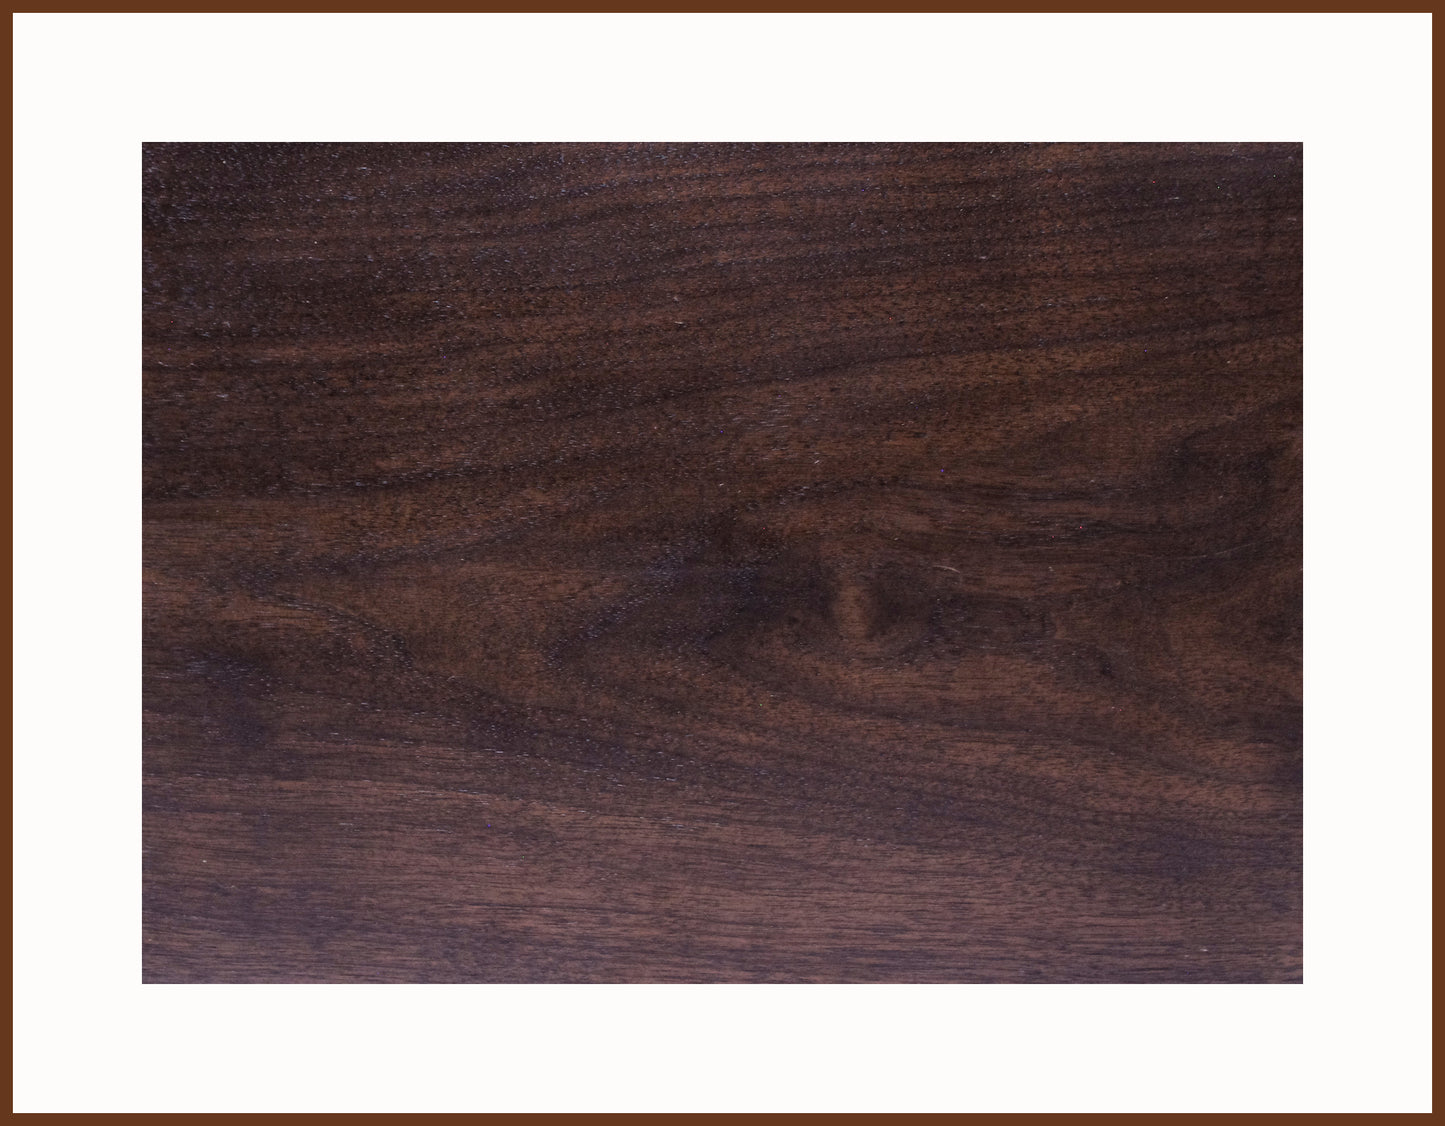 Curved Leg Bonsai Stand Walnut Hardwood - Dark Walnut Finish 12 3/8" Length, 9 1/4" Width, 4" Height